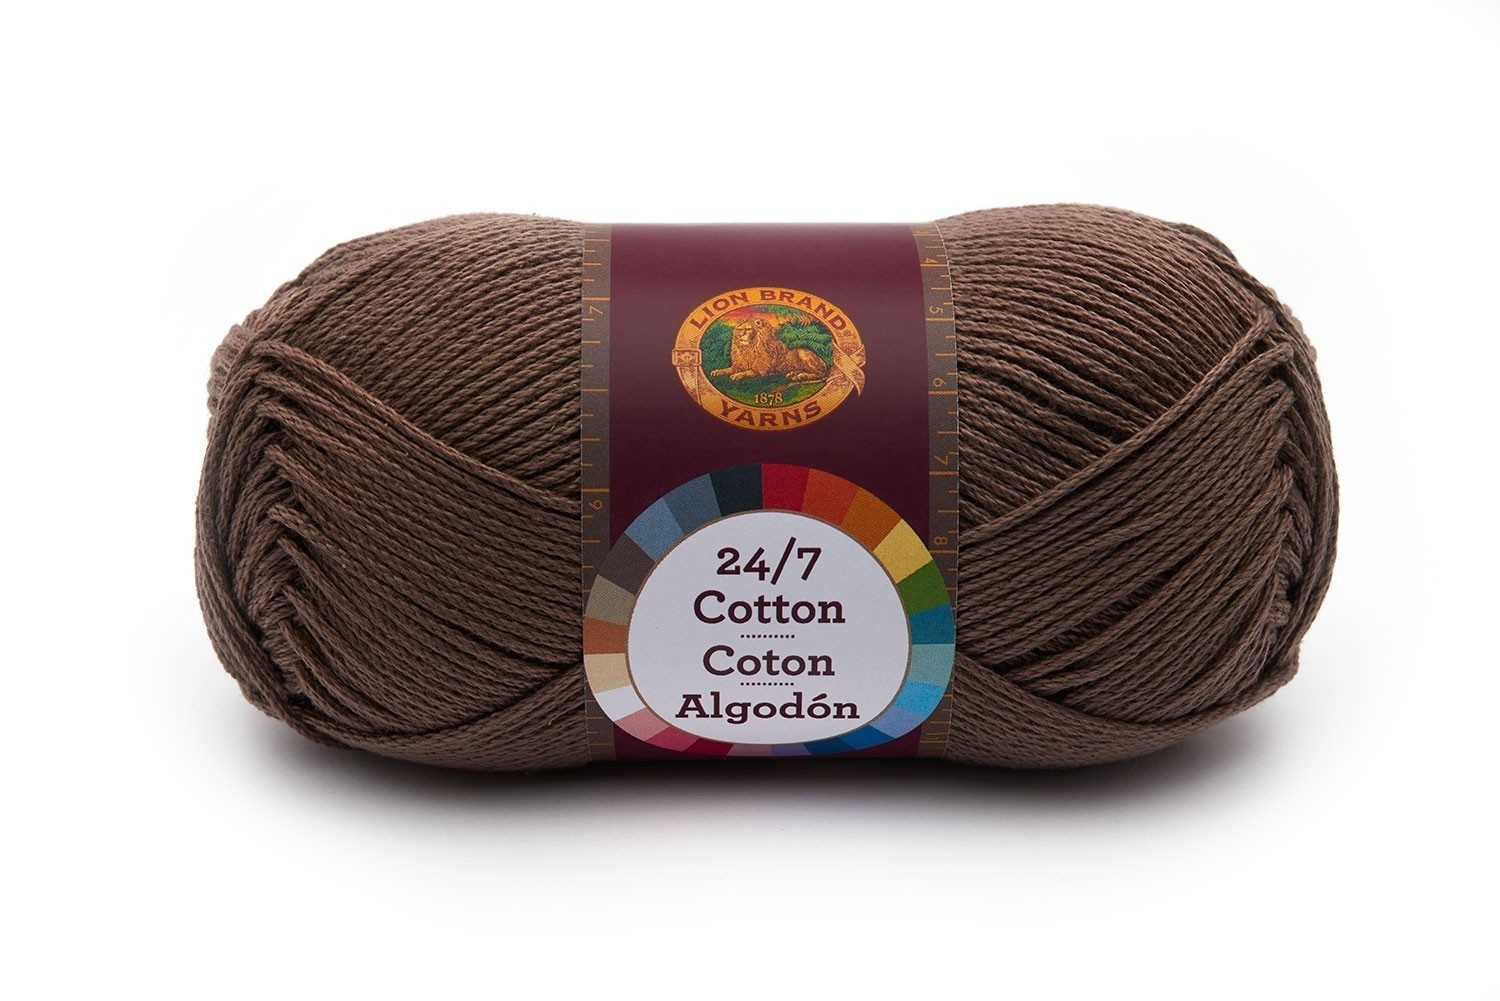 24 7 cotton yarn